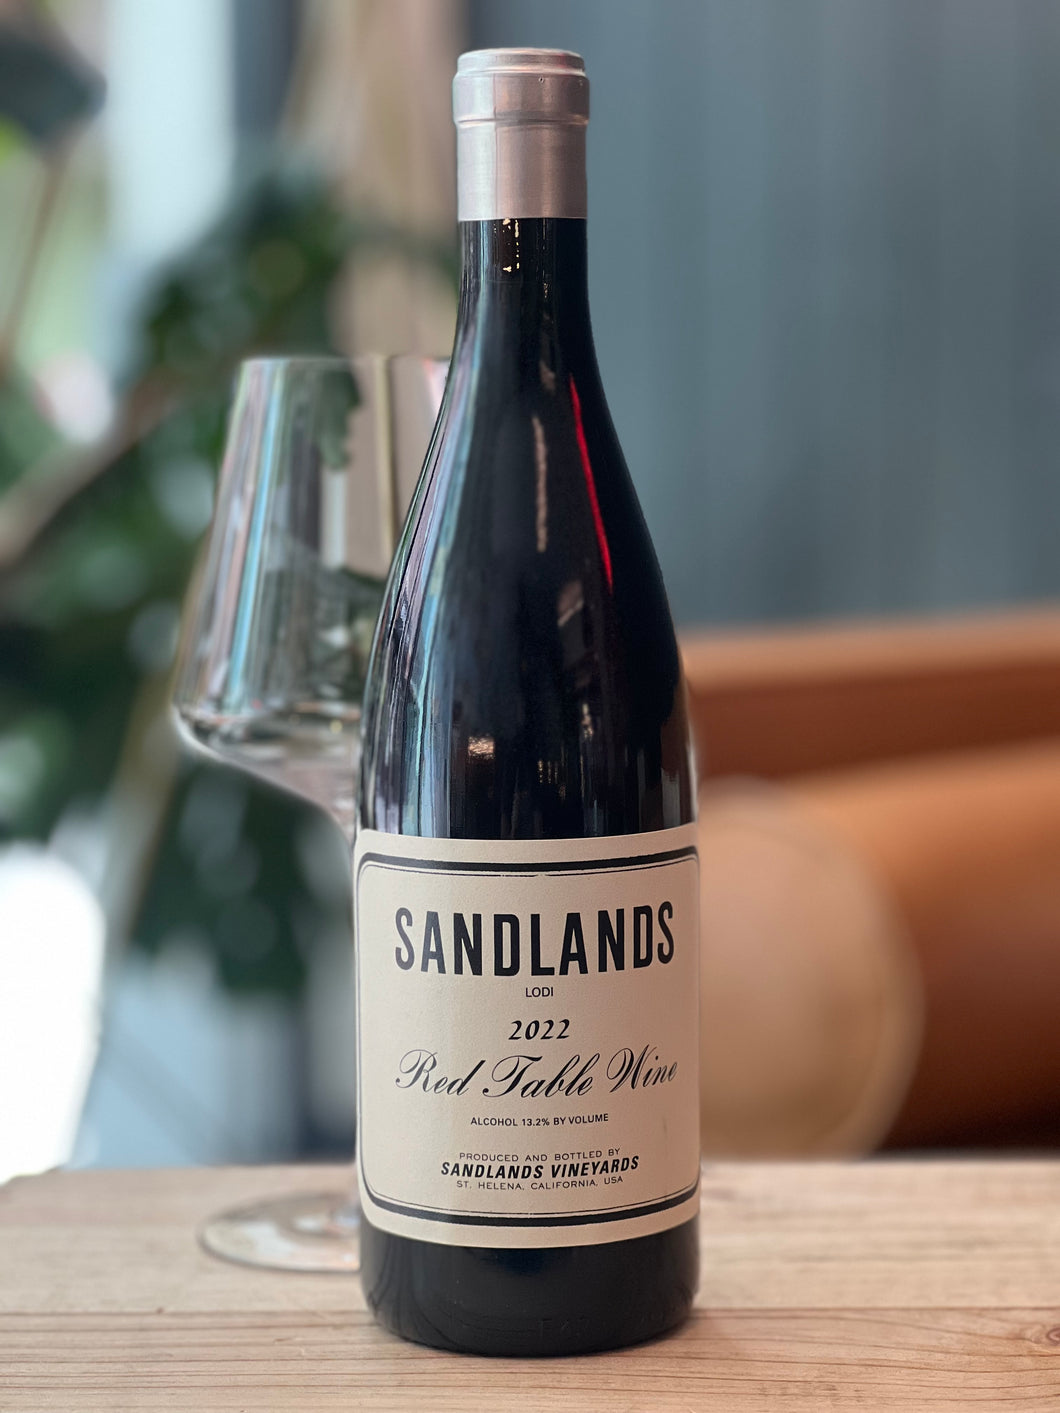 Sandlands “Red Table Wine” 2022